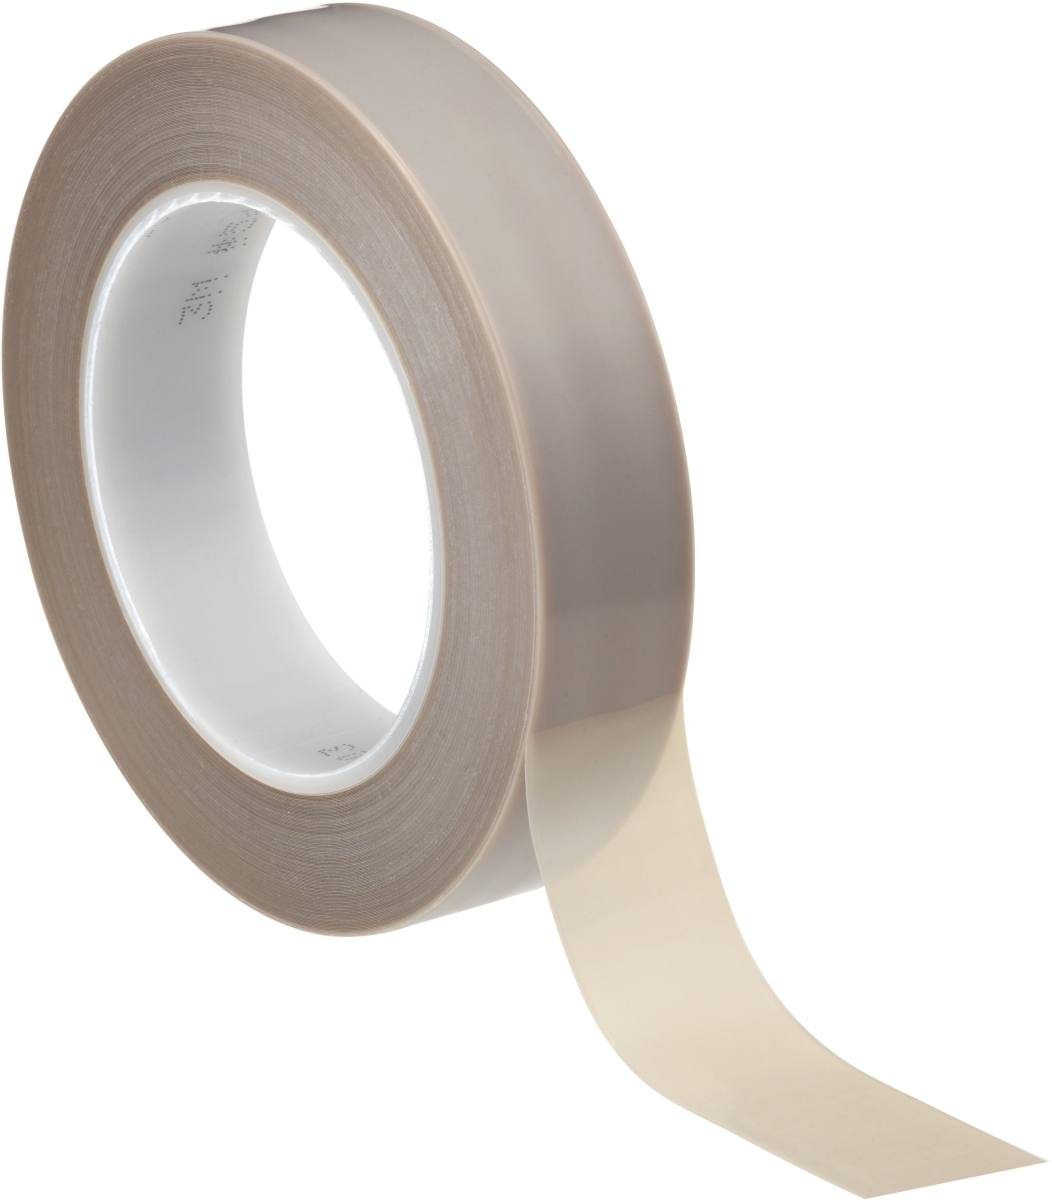 3M 5481 PTFE film adhesive tape 19mmx33m, 0.17mm, silicone